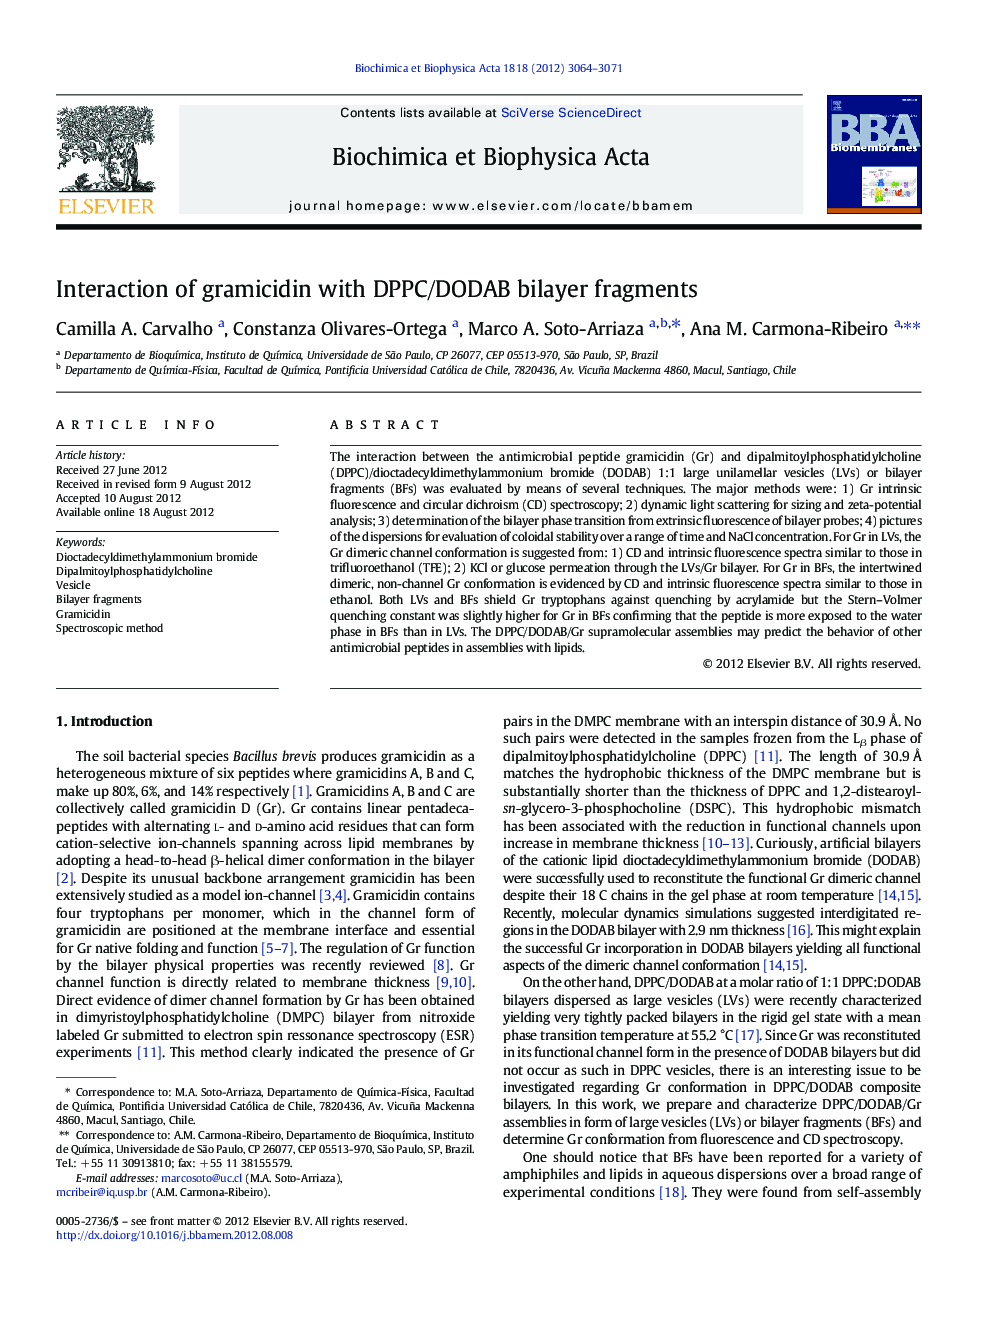 Interaction of gramicidin with DPPC/DODAB bilayer fragments